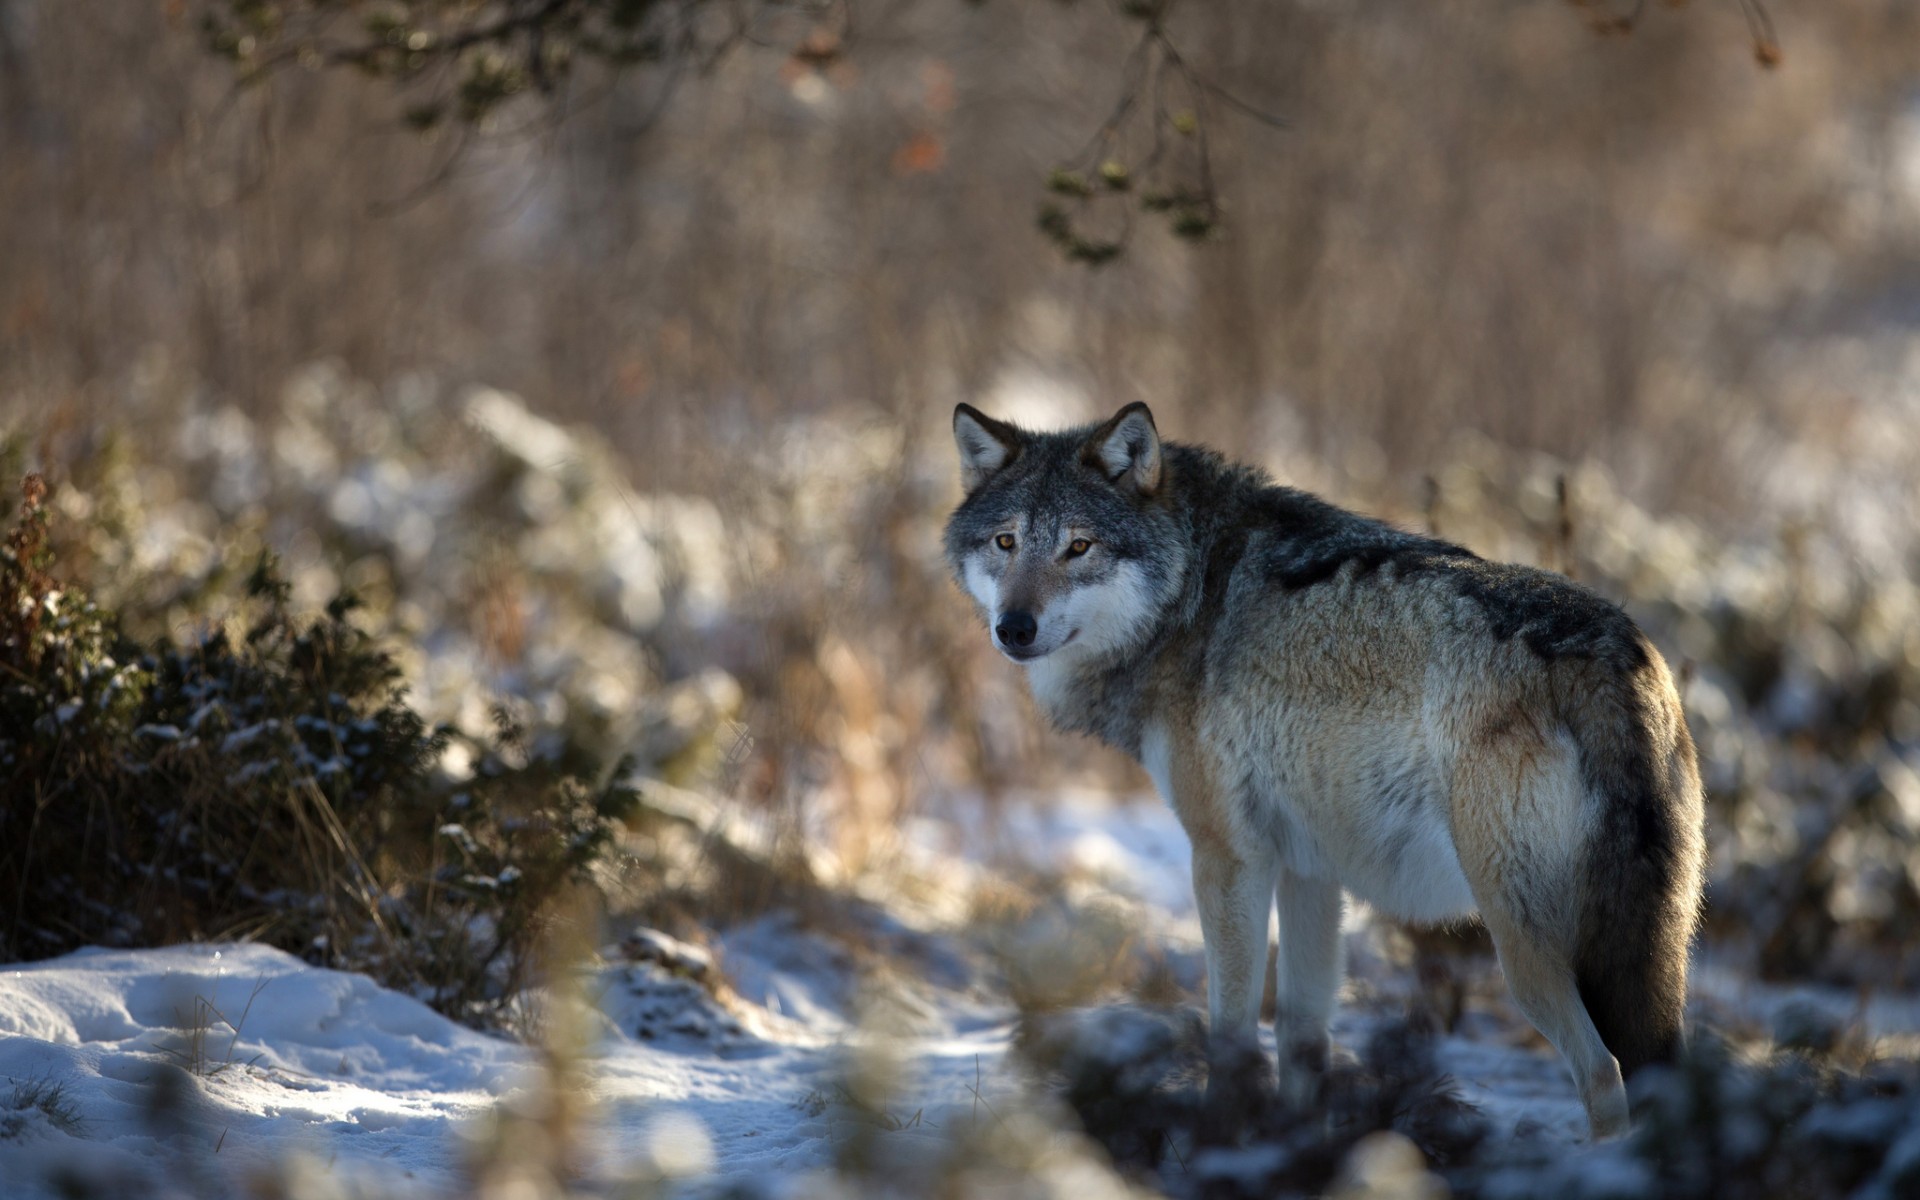 fond d'écran de loup gratuit,faune,canis lupus tundrarum,loup,coyote,animal terrestre